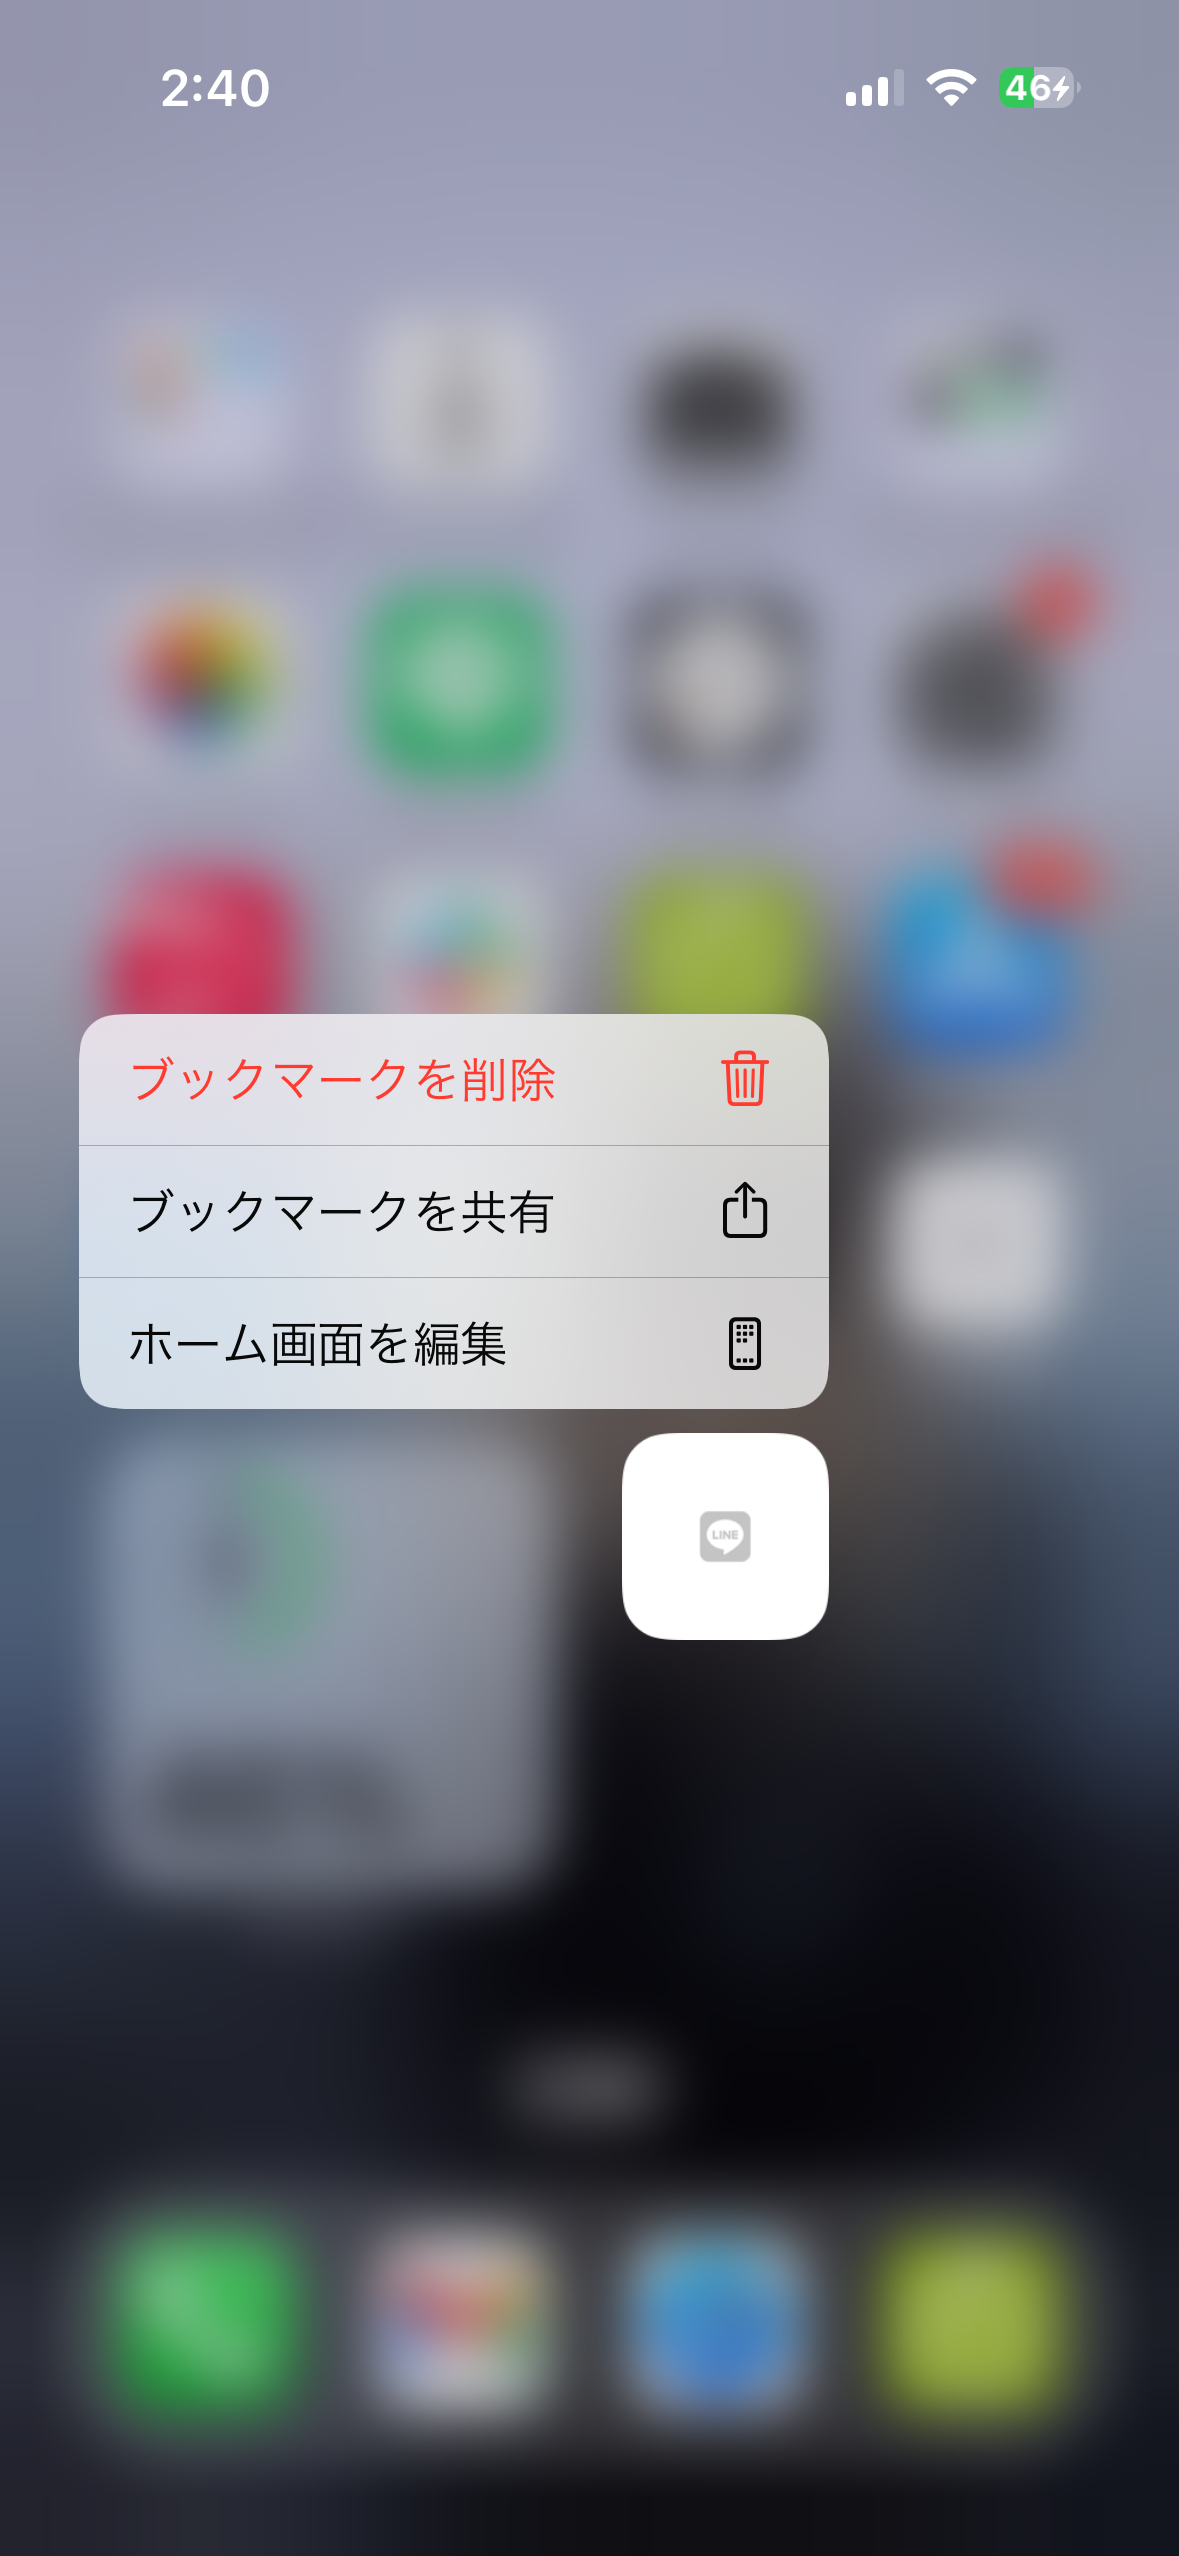 [iOS] 画面に追加した着せ替え後のアプリアイコンの削除方法の画像1枚目